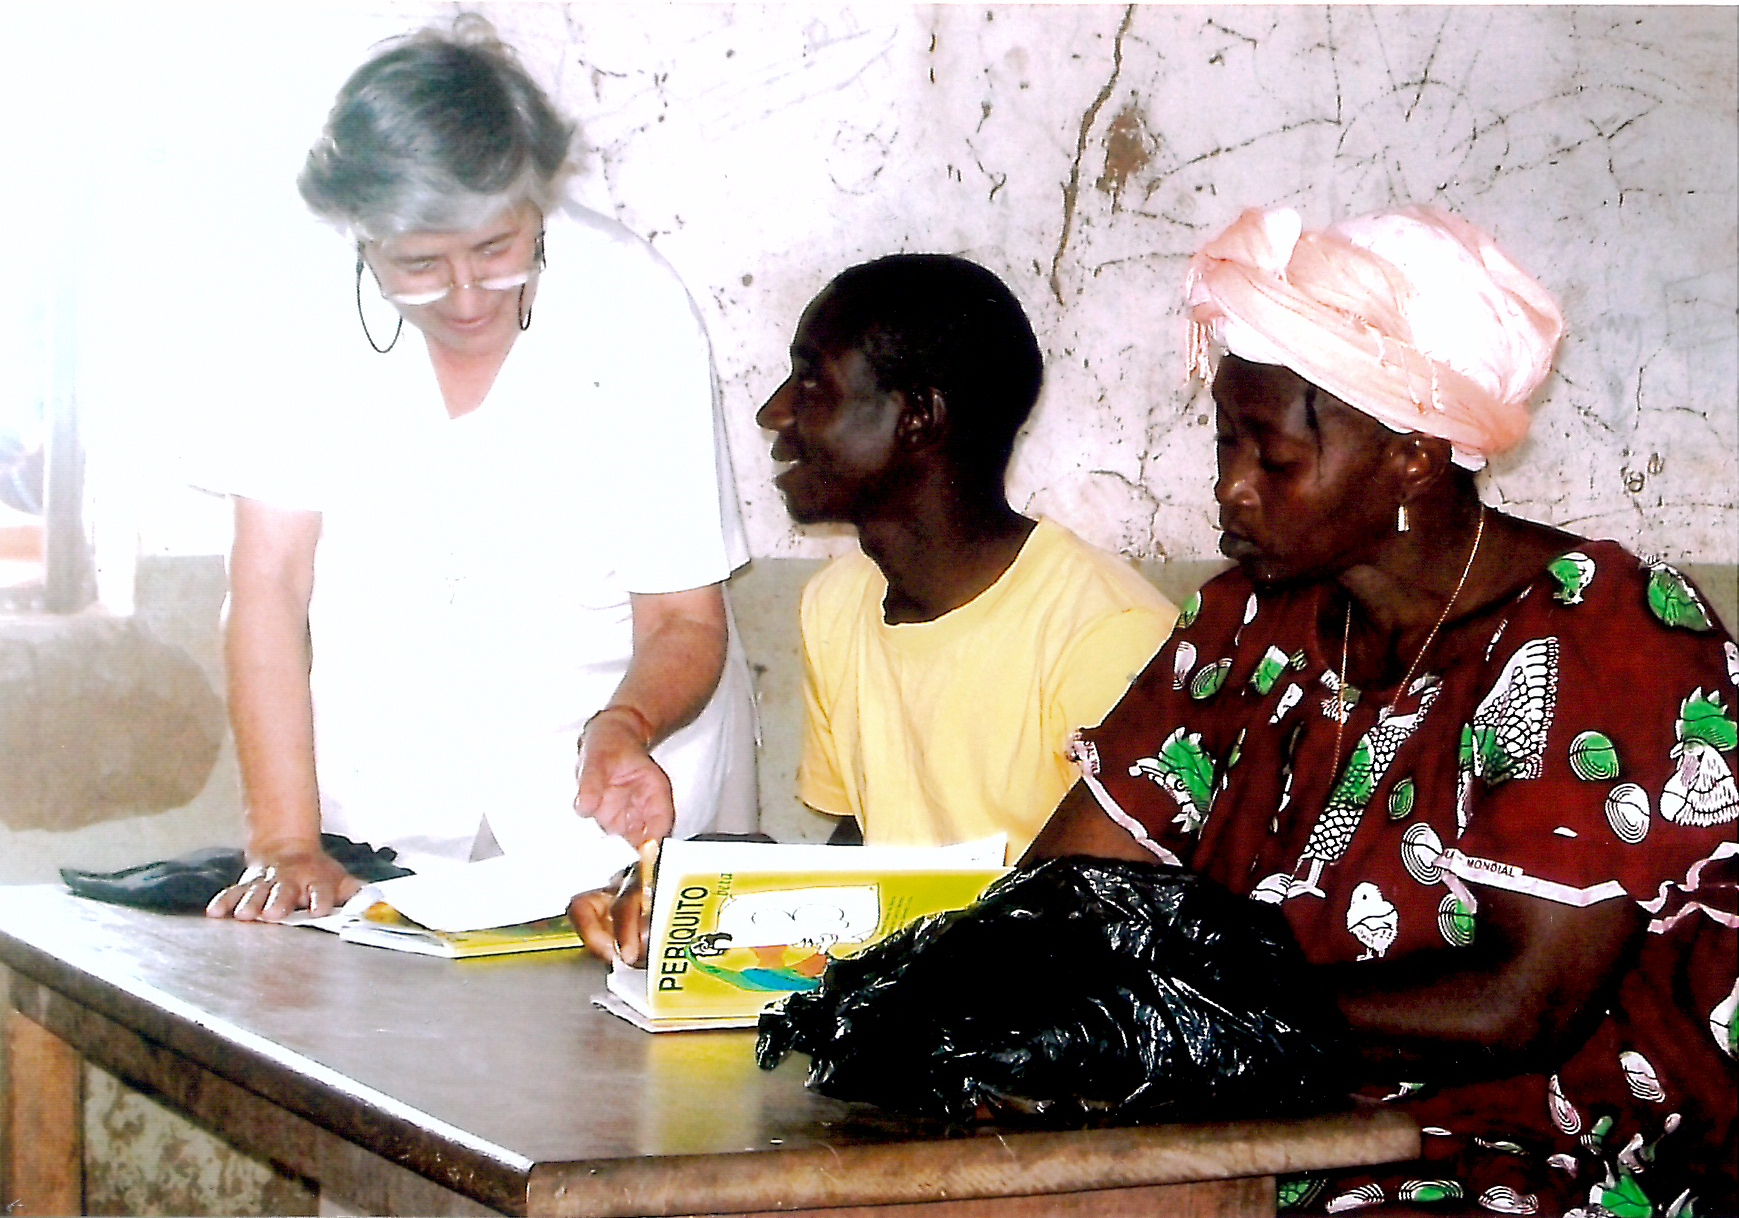 Guinea 2010: literacy and evangelisation